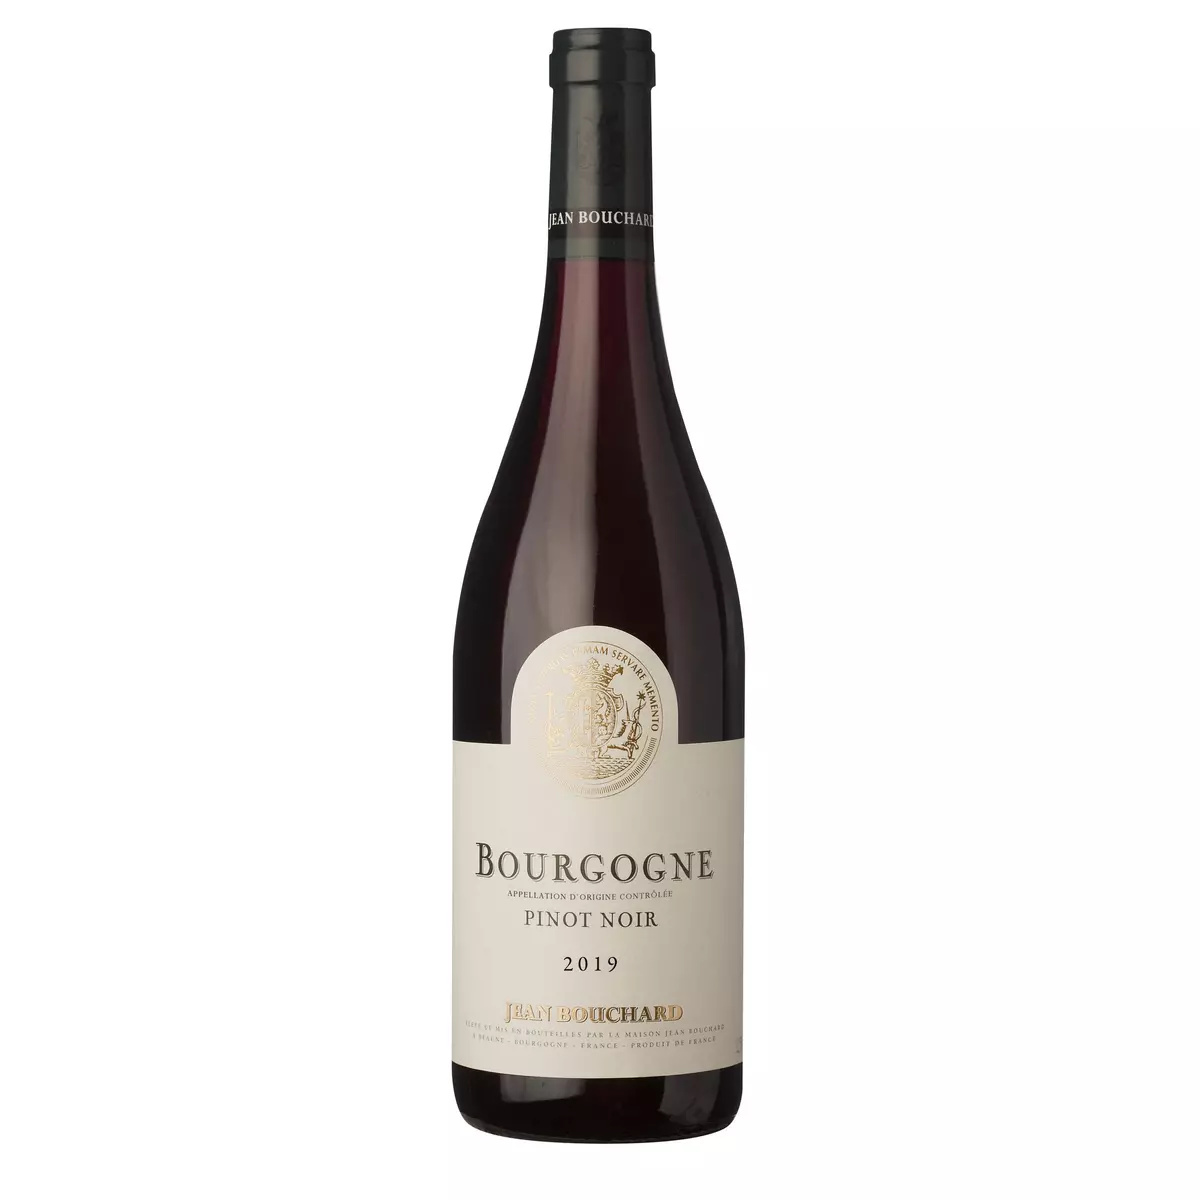 Vin rouge AOP Bourgogne pinot noir Jean Bouchard 2019 75cl